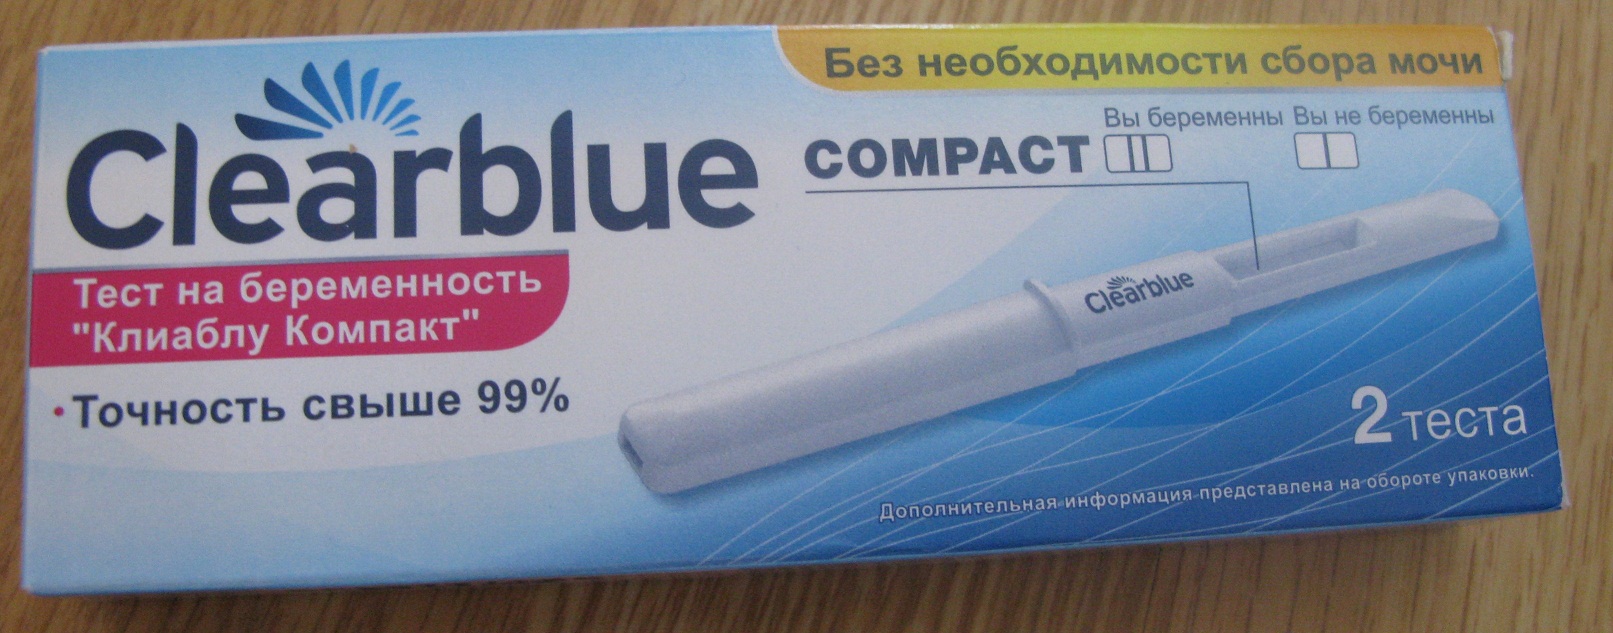 Тест на беременность название. Тест на беременность Clearblue Compact. Тест Clearblue упаковка. Тест на беременность клиаблу (Clearblue) Plus. Тест Clearblue Compact.